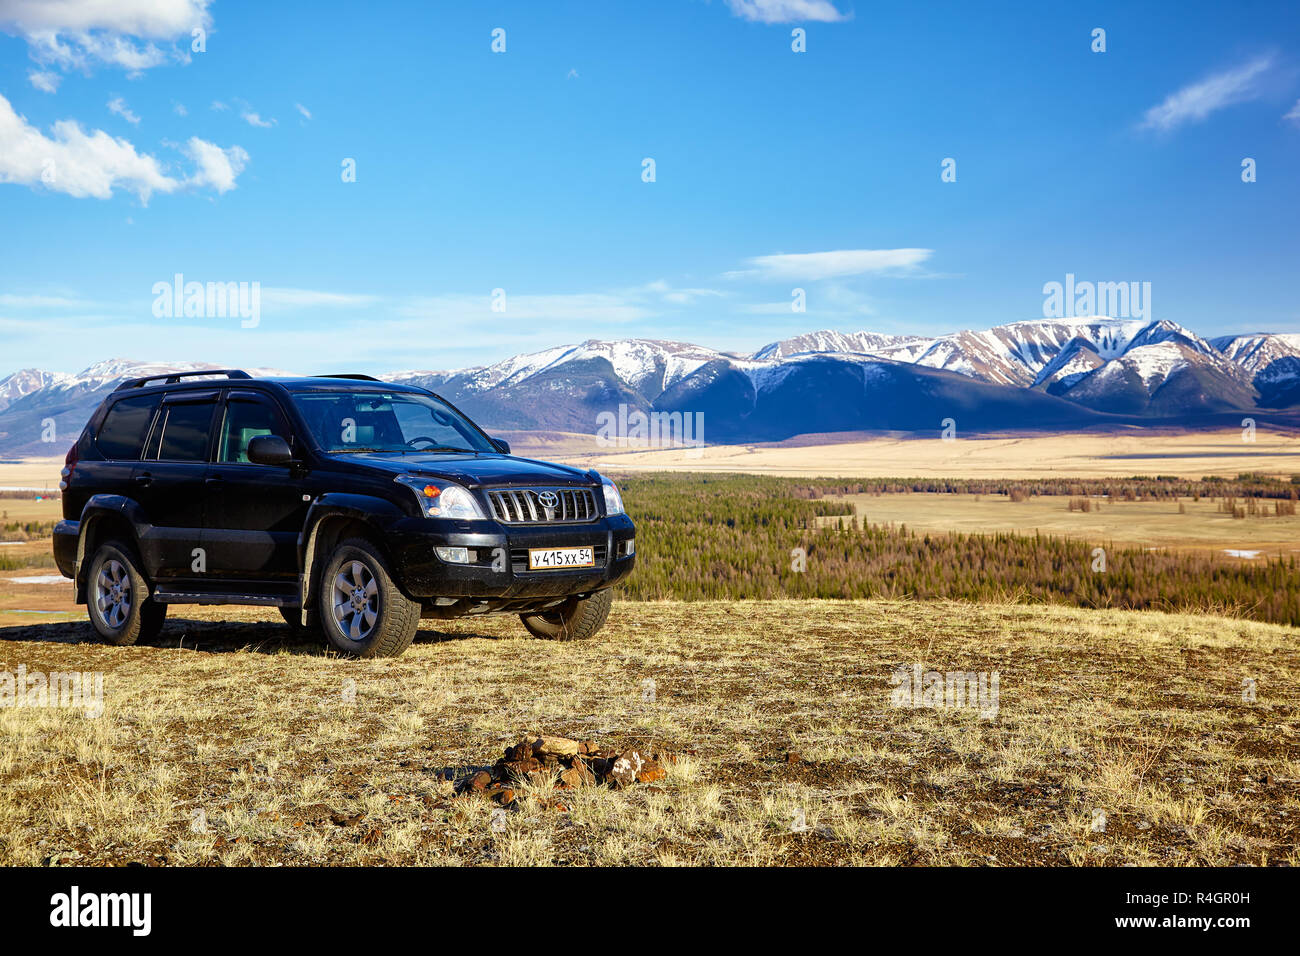 KURAI, RUSSIA - MAY 27, 2015: Black Land Cruiser Prado in Altai mountains in Kurai area with North Chuisky Ridge on background. Stock Photo